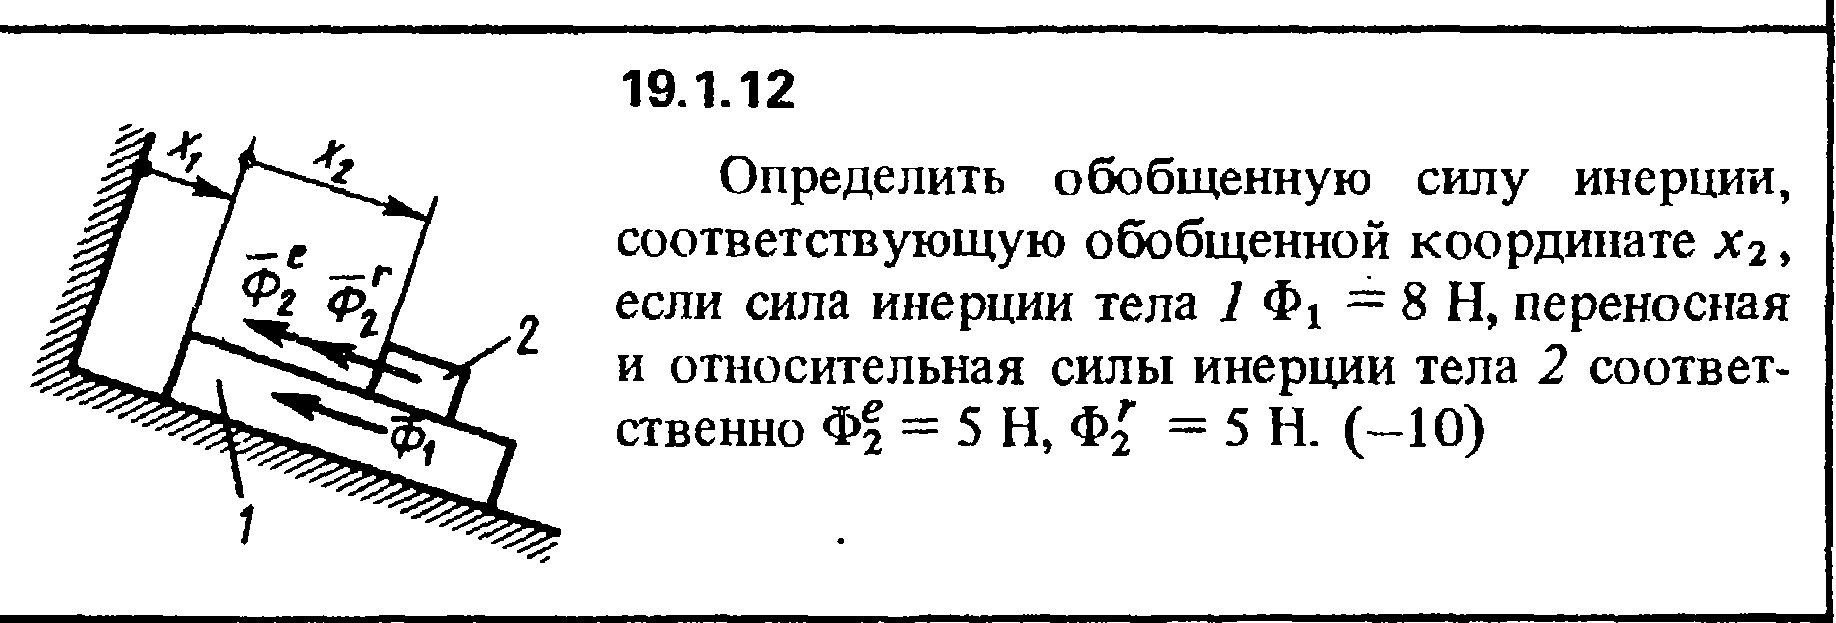 Решение 19.1.12 из сборника (решебника) Кепе О.Е. 1989